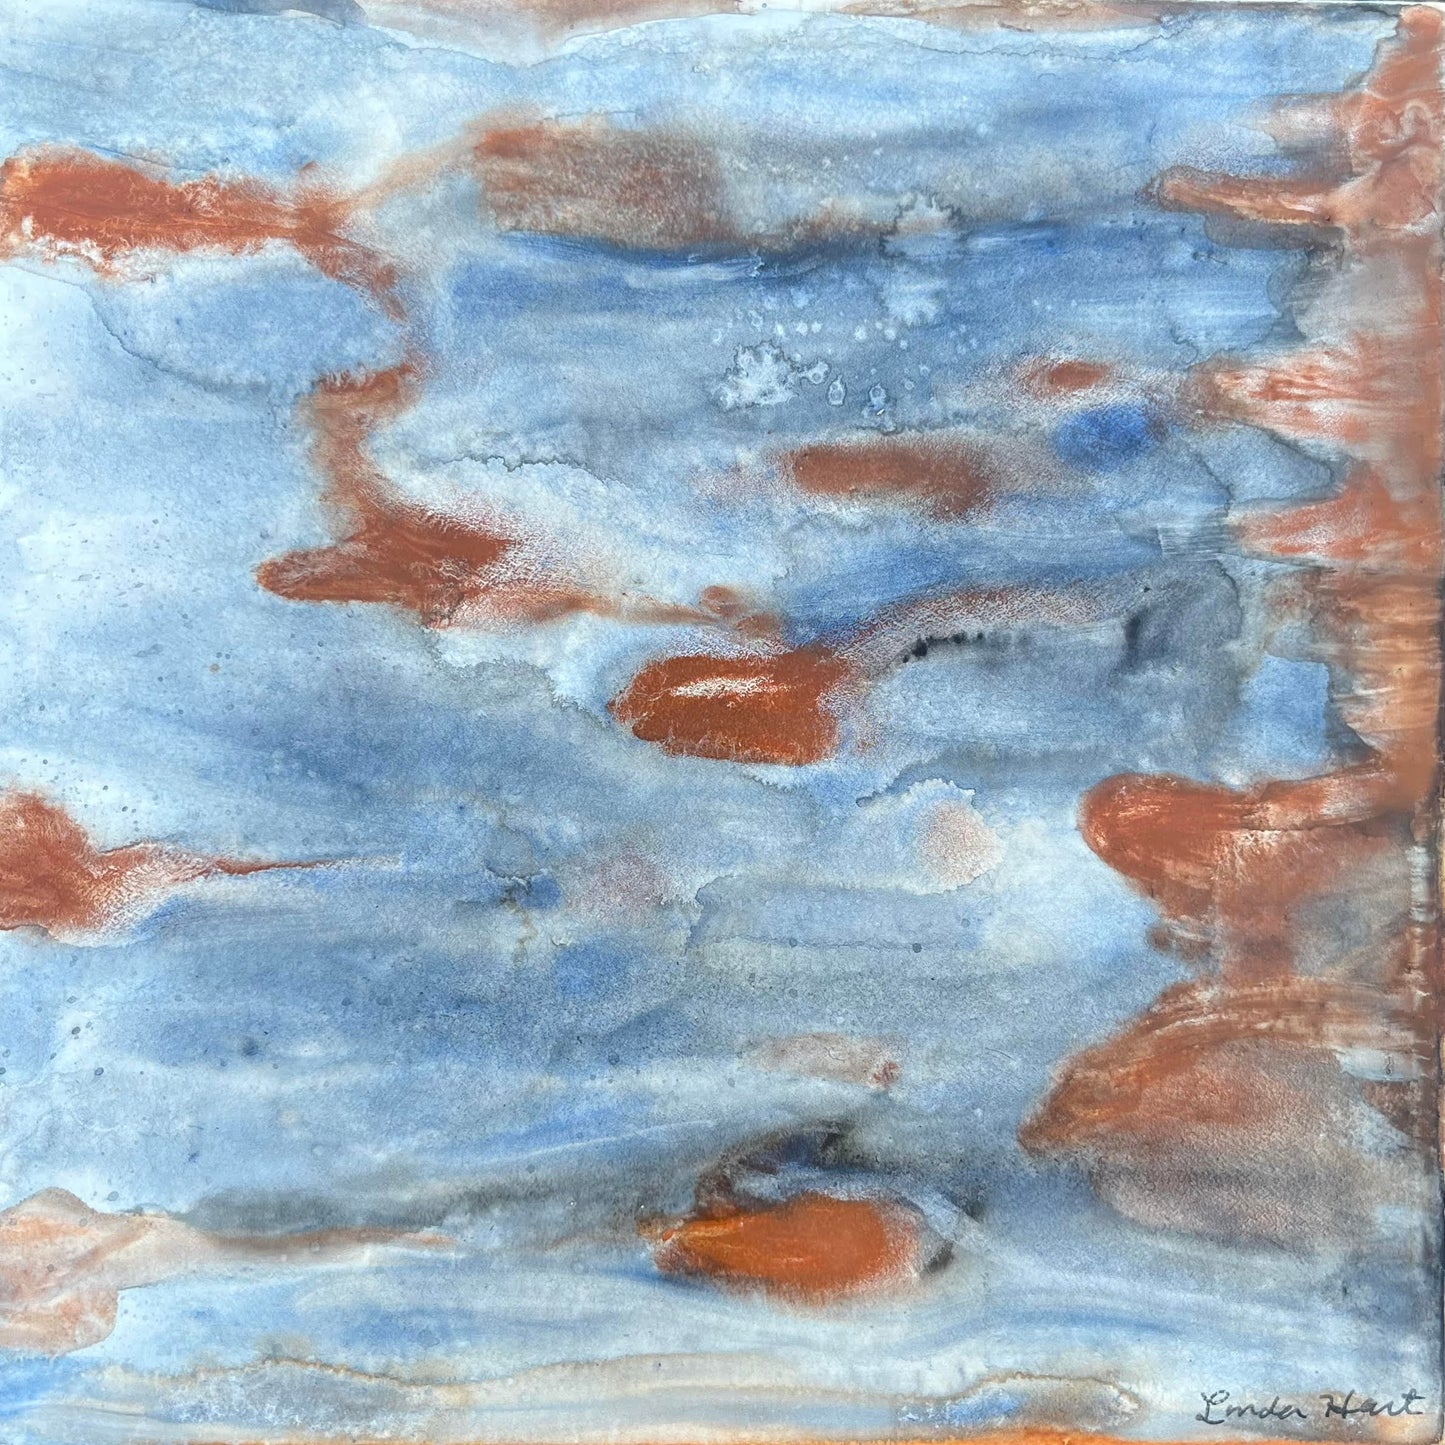 Rust Reflections -6" x 6" x 1.5" - Original Watercolor on Clayboard